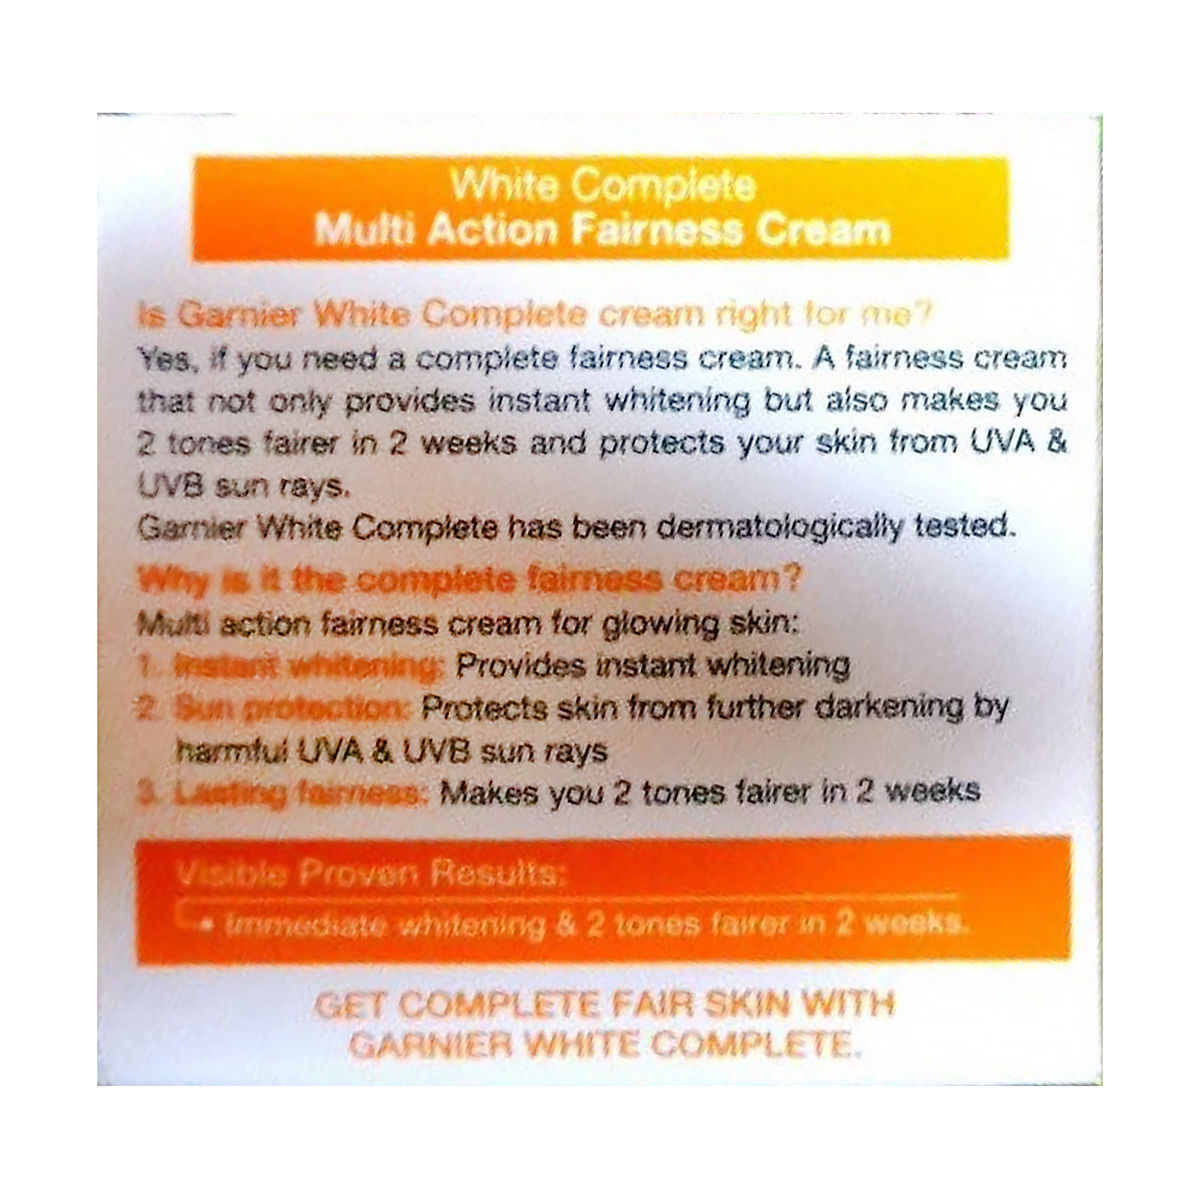 Garnier White Complete Multi Action  SPF 17 PA++ Fairness Cream, 18 gm, Pack of 1 